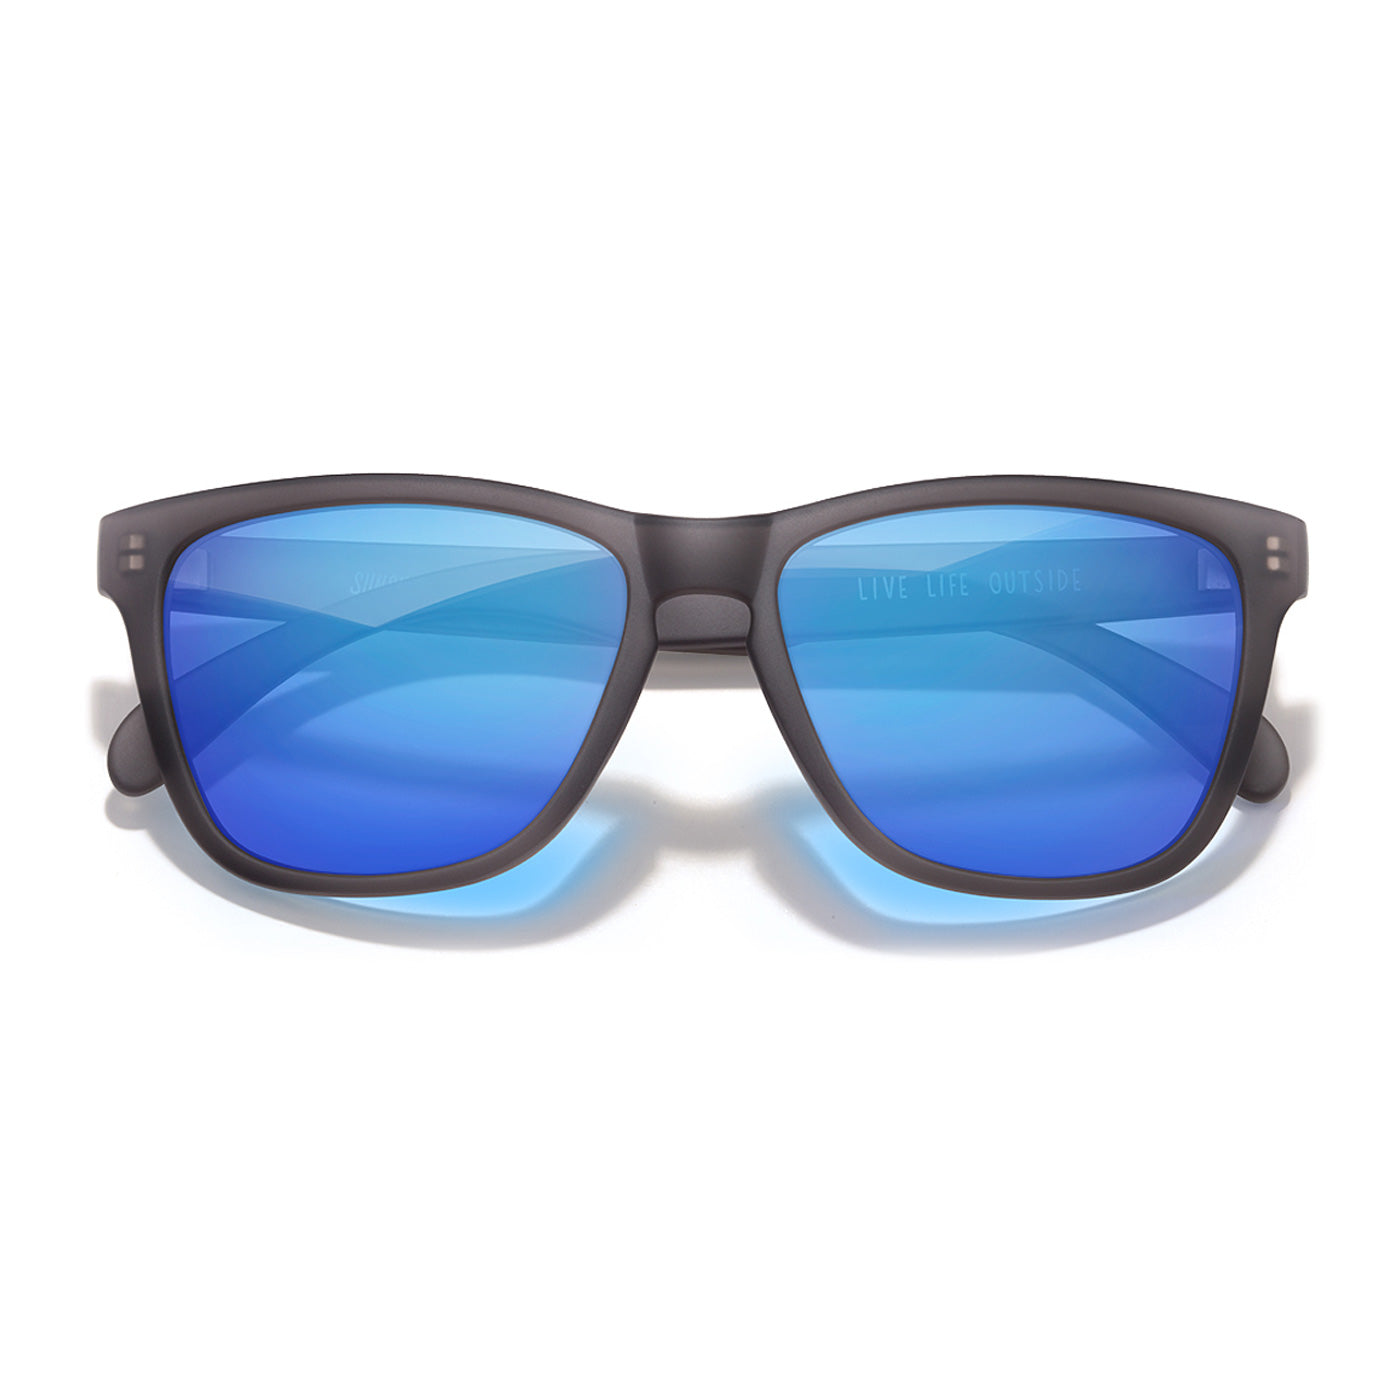 Headland Black with Blue lenses sunglasses by Sunski